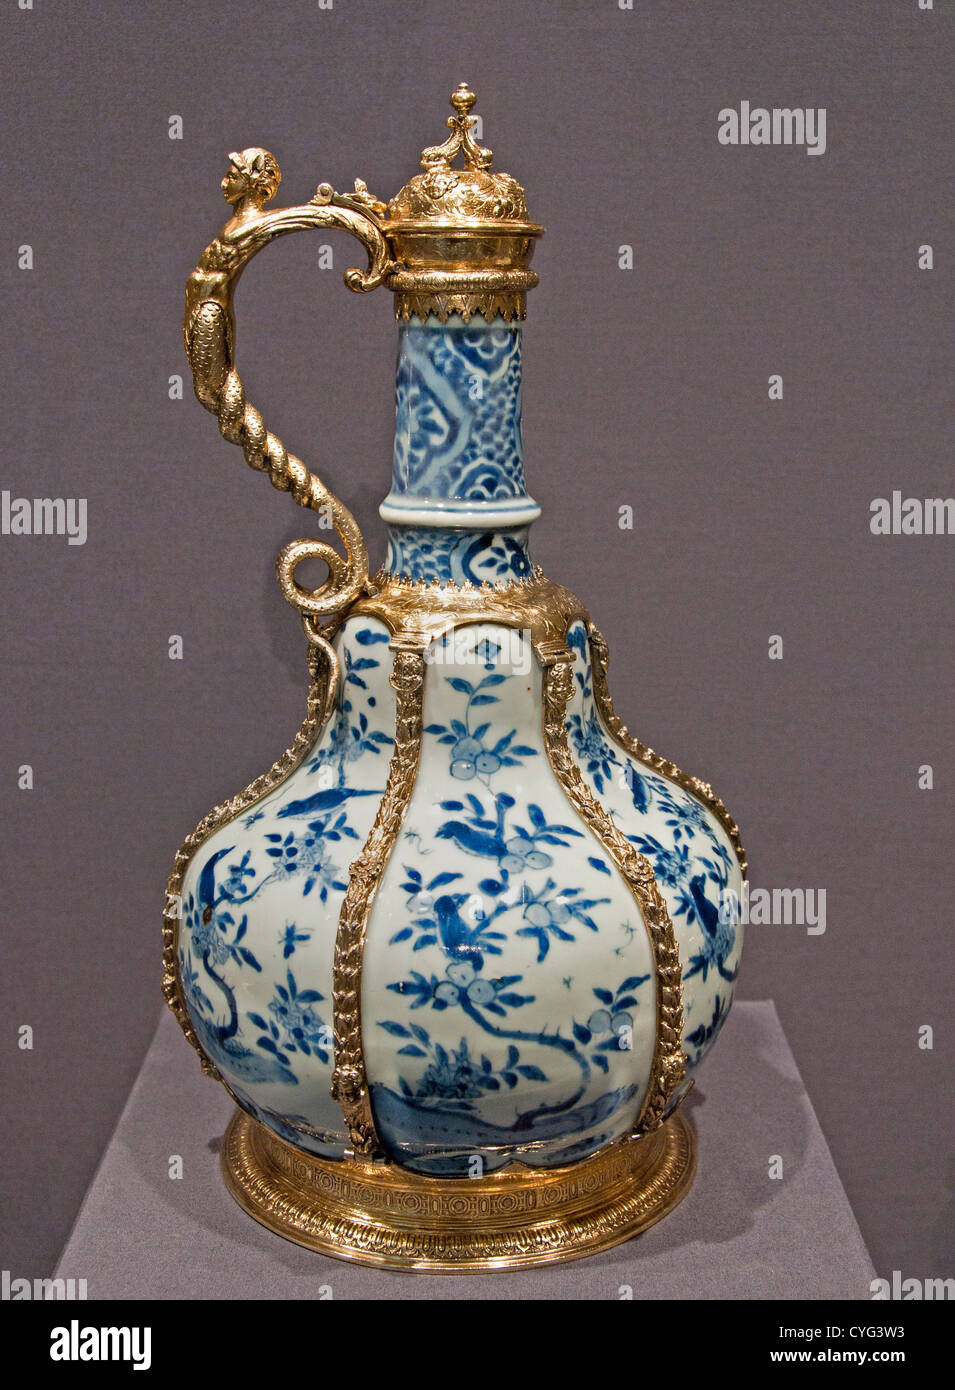 Ewer porcellana cinese periodo Wanli monta inglese 1585 Londra porcellana argento dorato 34,6 cm Foto Stock